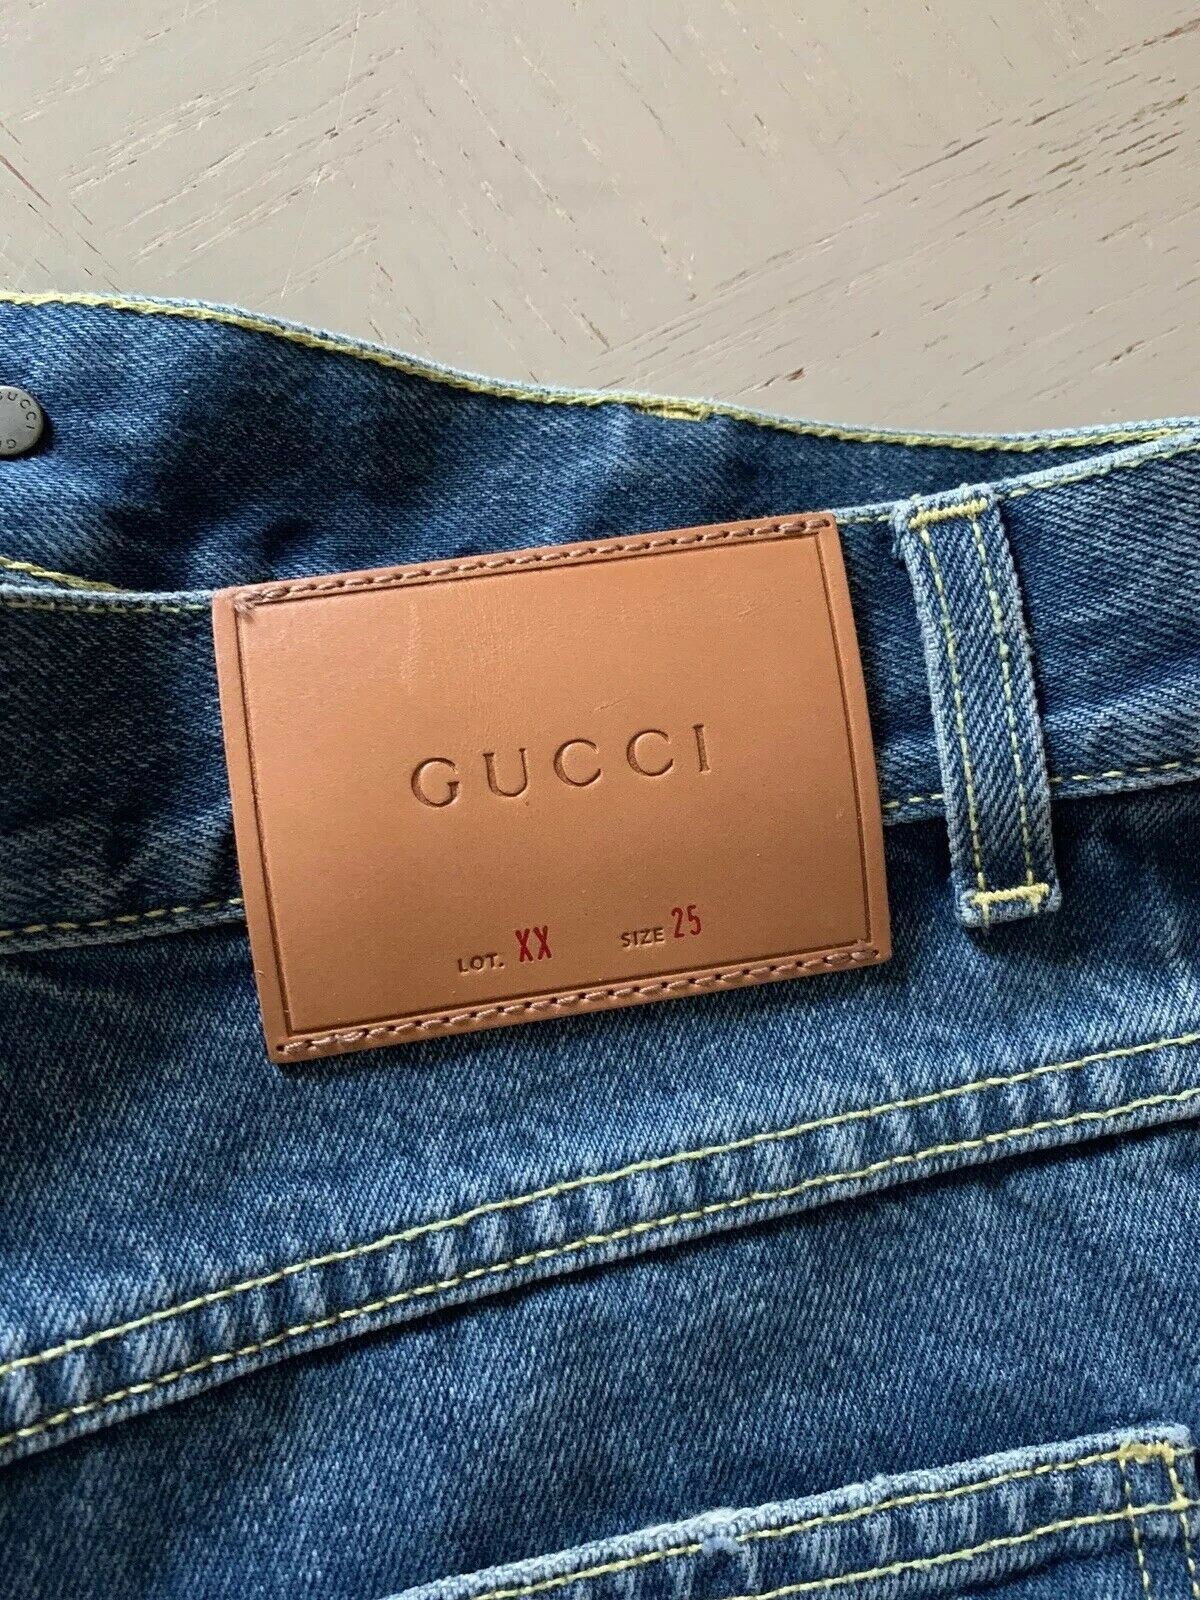 New $945 Gucci Women's Jeans Pants Skirt Blue Size 25